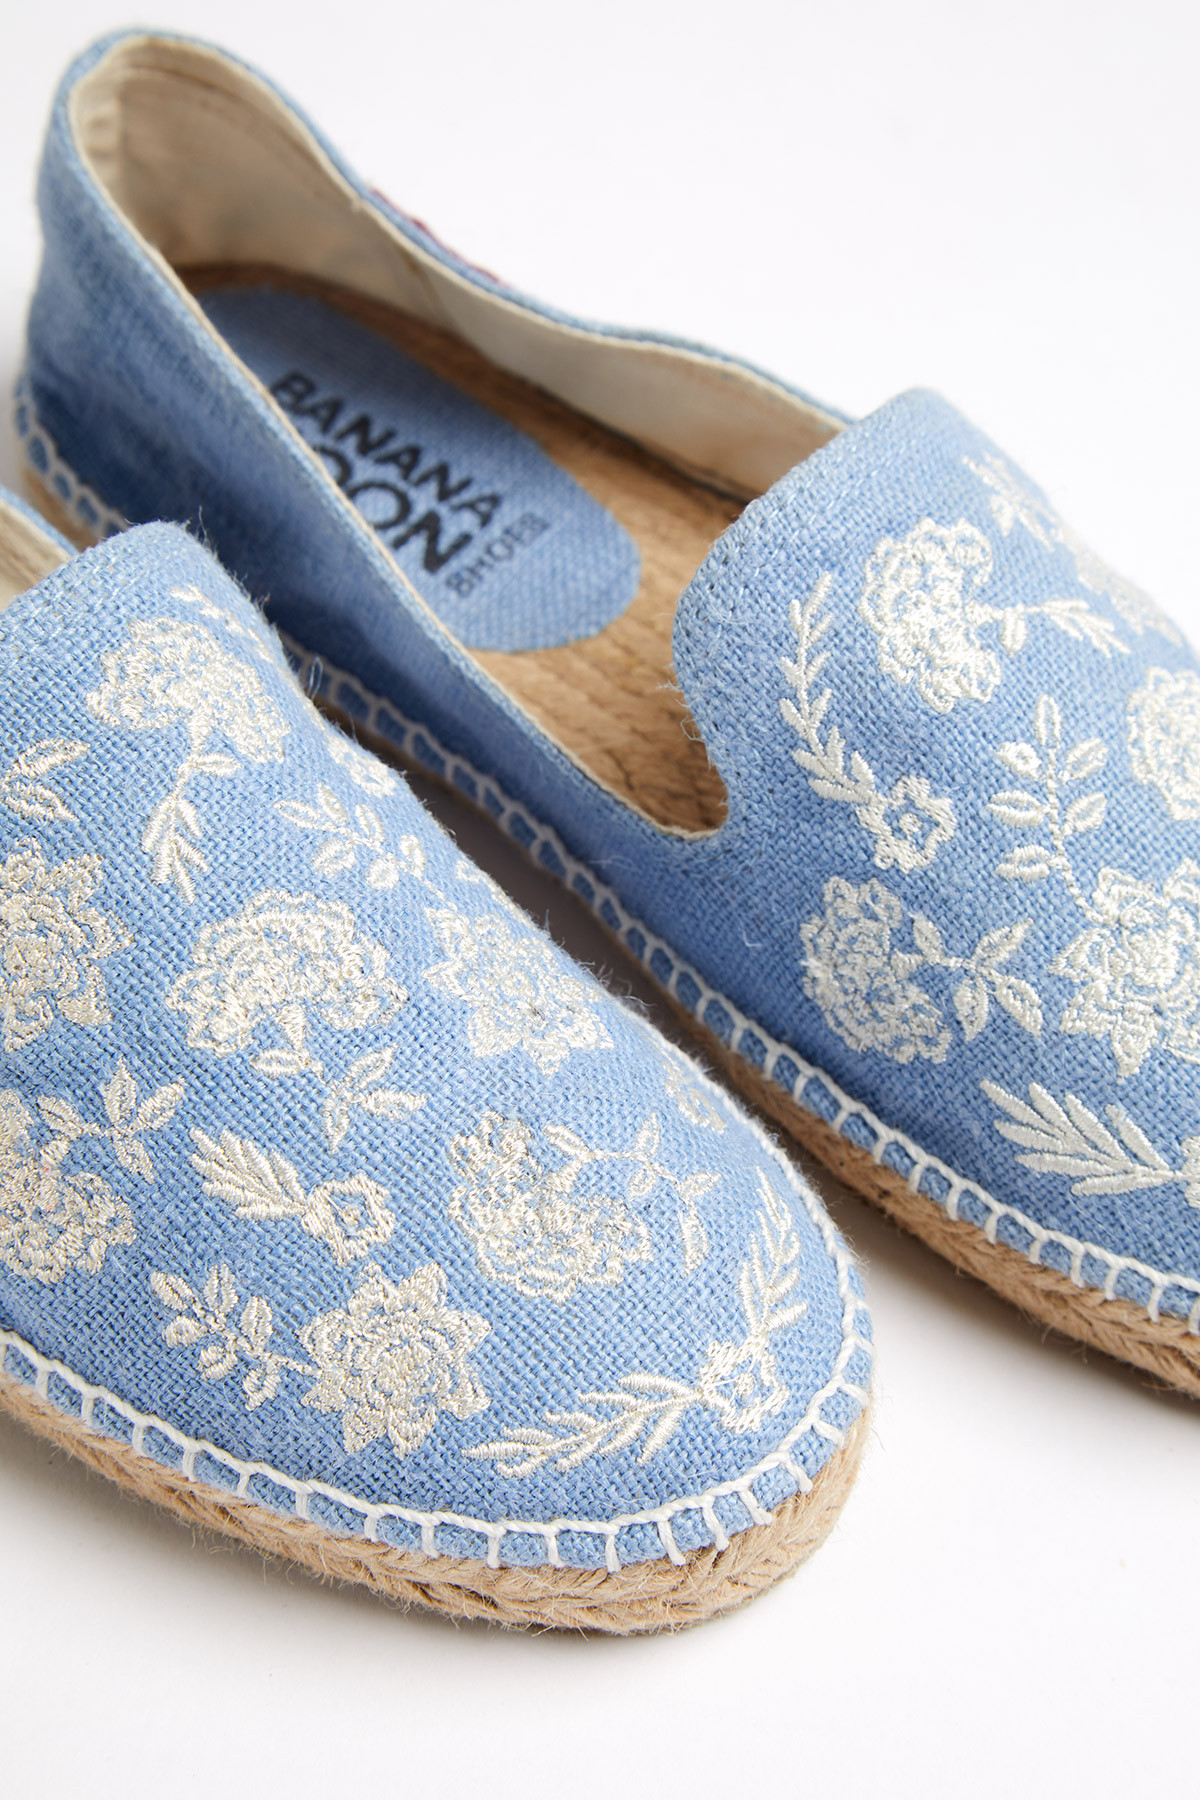 Beloved bestikke smøre Women's blue espadrilles with floral embroidery | IASMIN ESPADRILLE